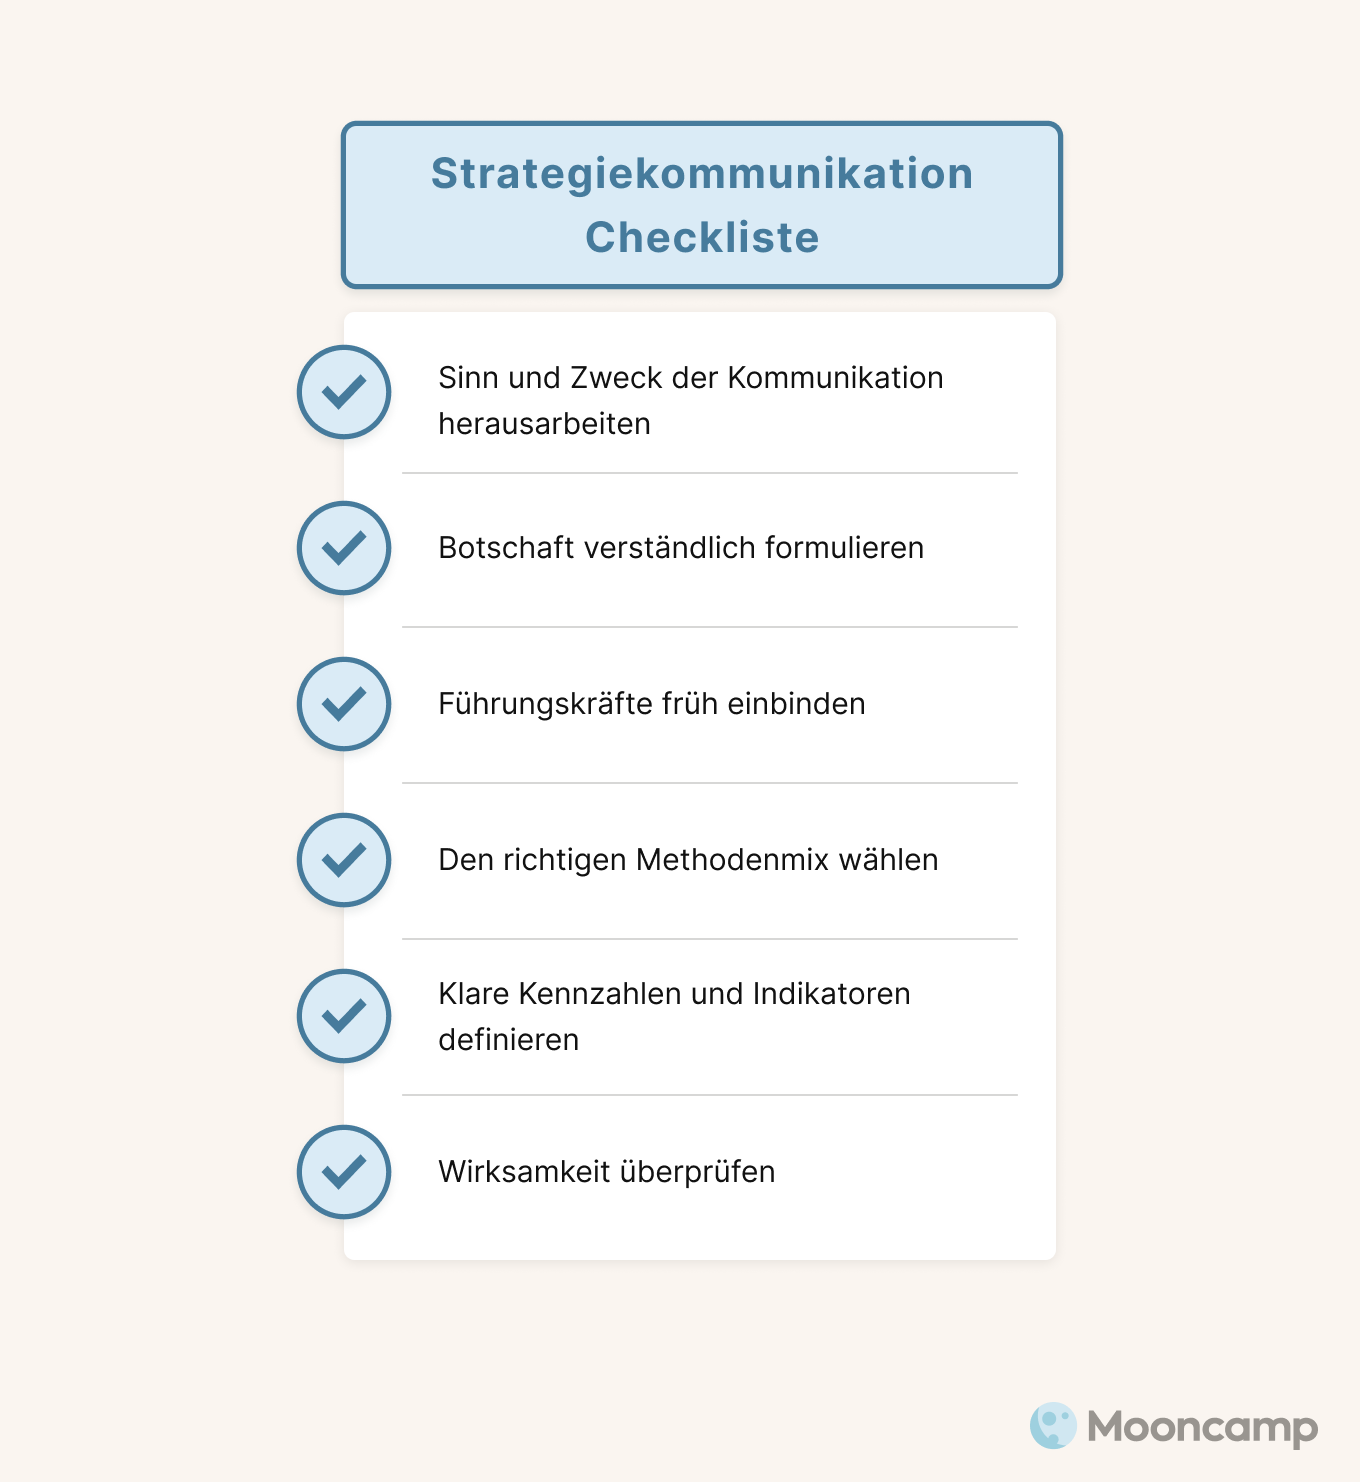 Strategic Communication Checklist